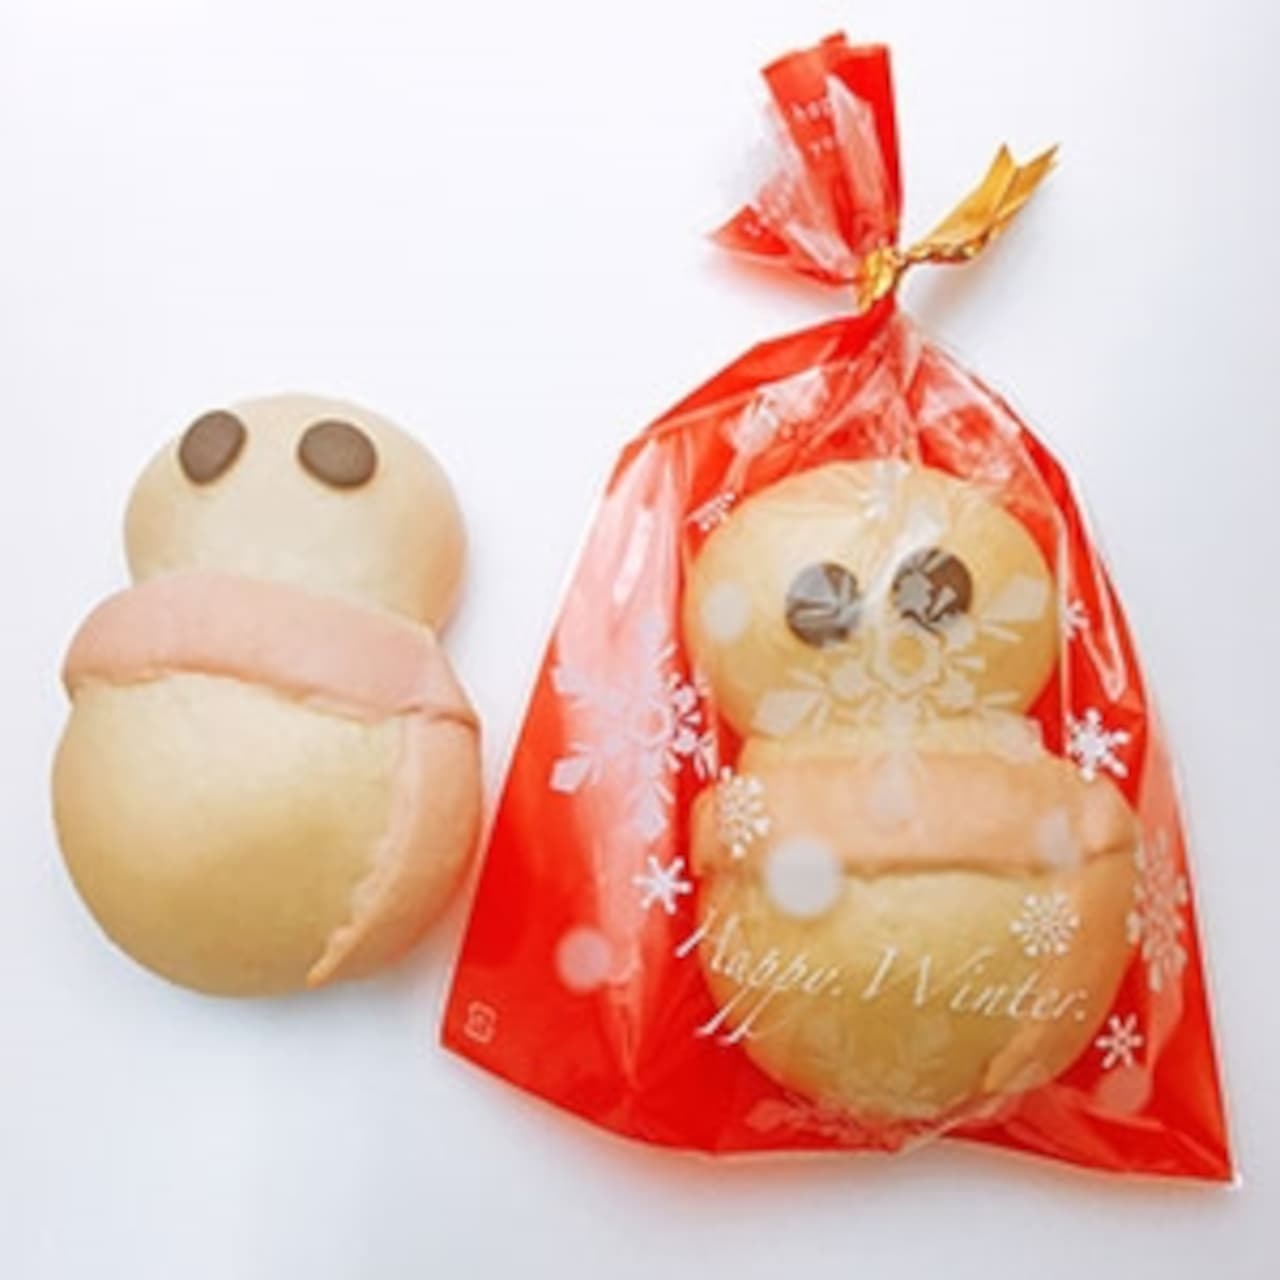 Kimuraya Sohonten New bread summary for December